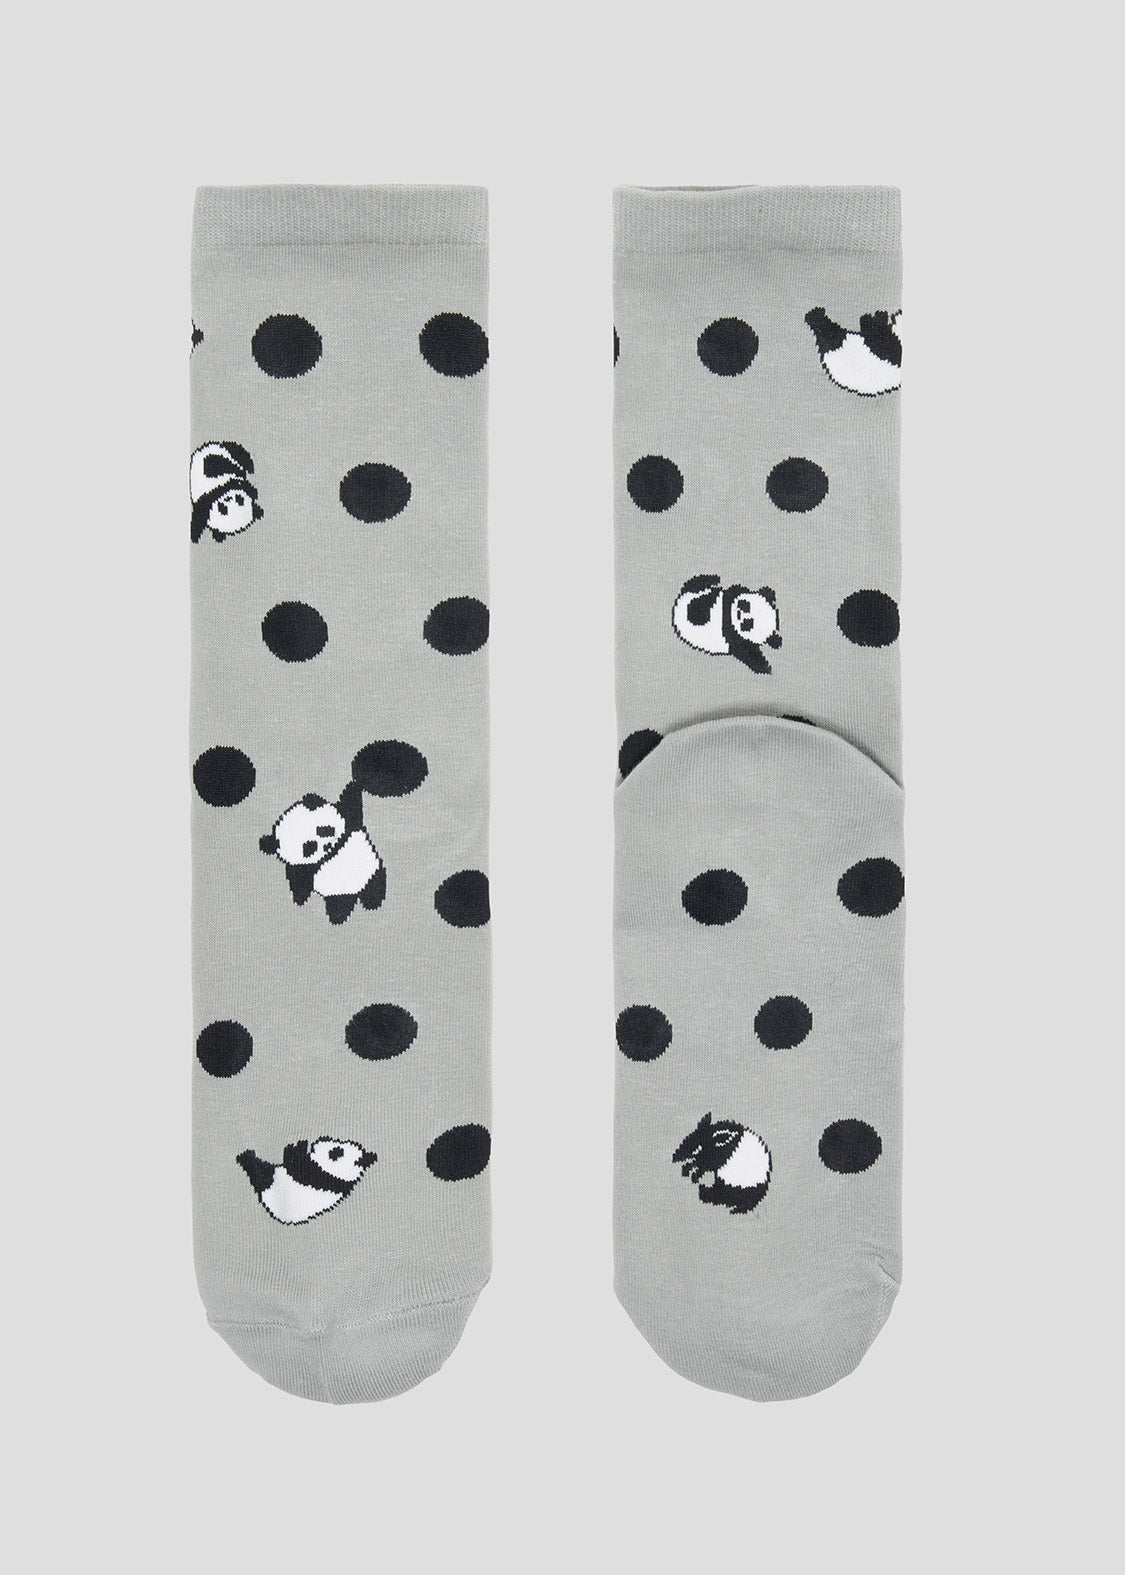 Middle Socks (Rolling Pandas 2)